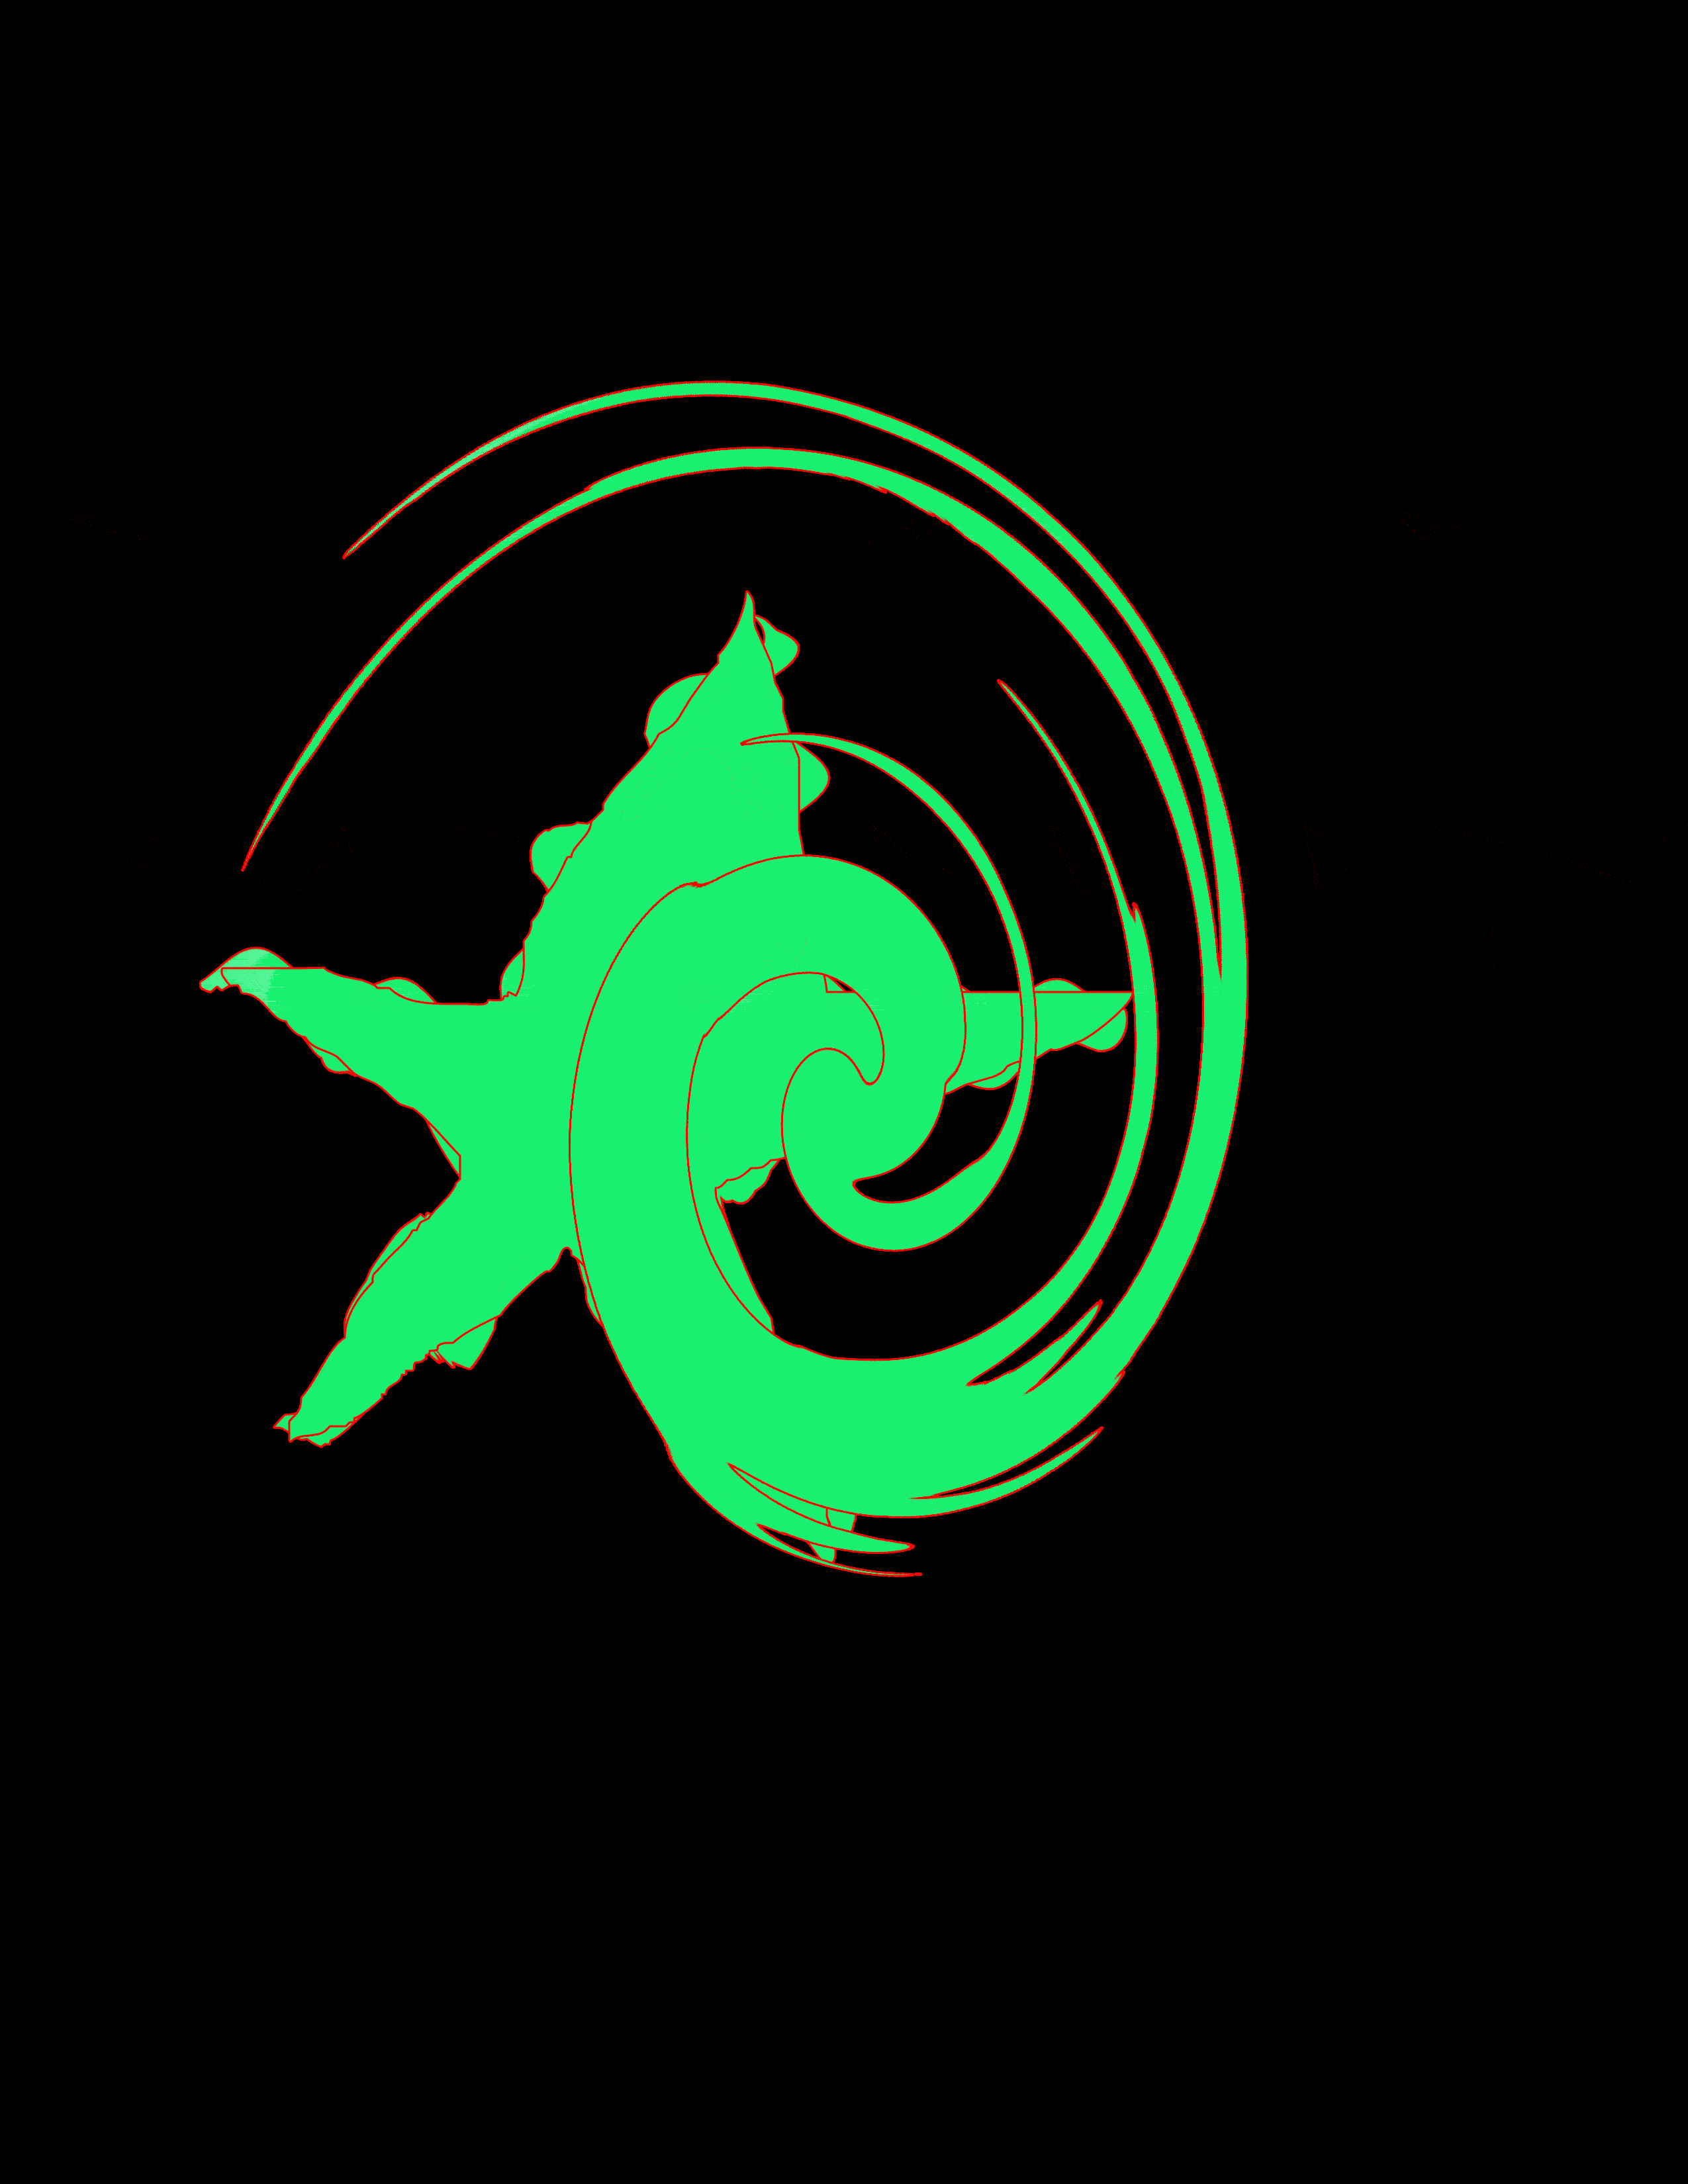 Swirl N Logo - Swirl n Star by frederick7 on DeviantArt